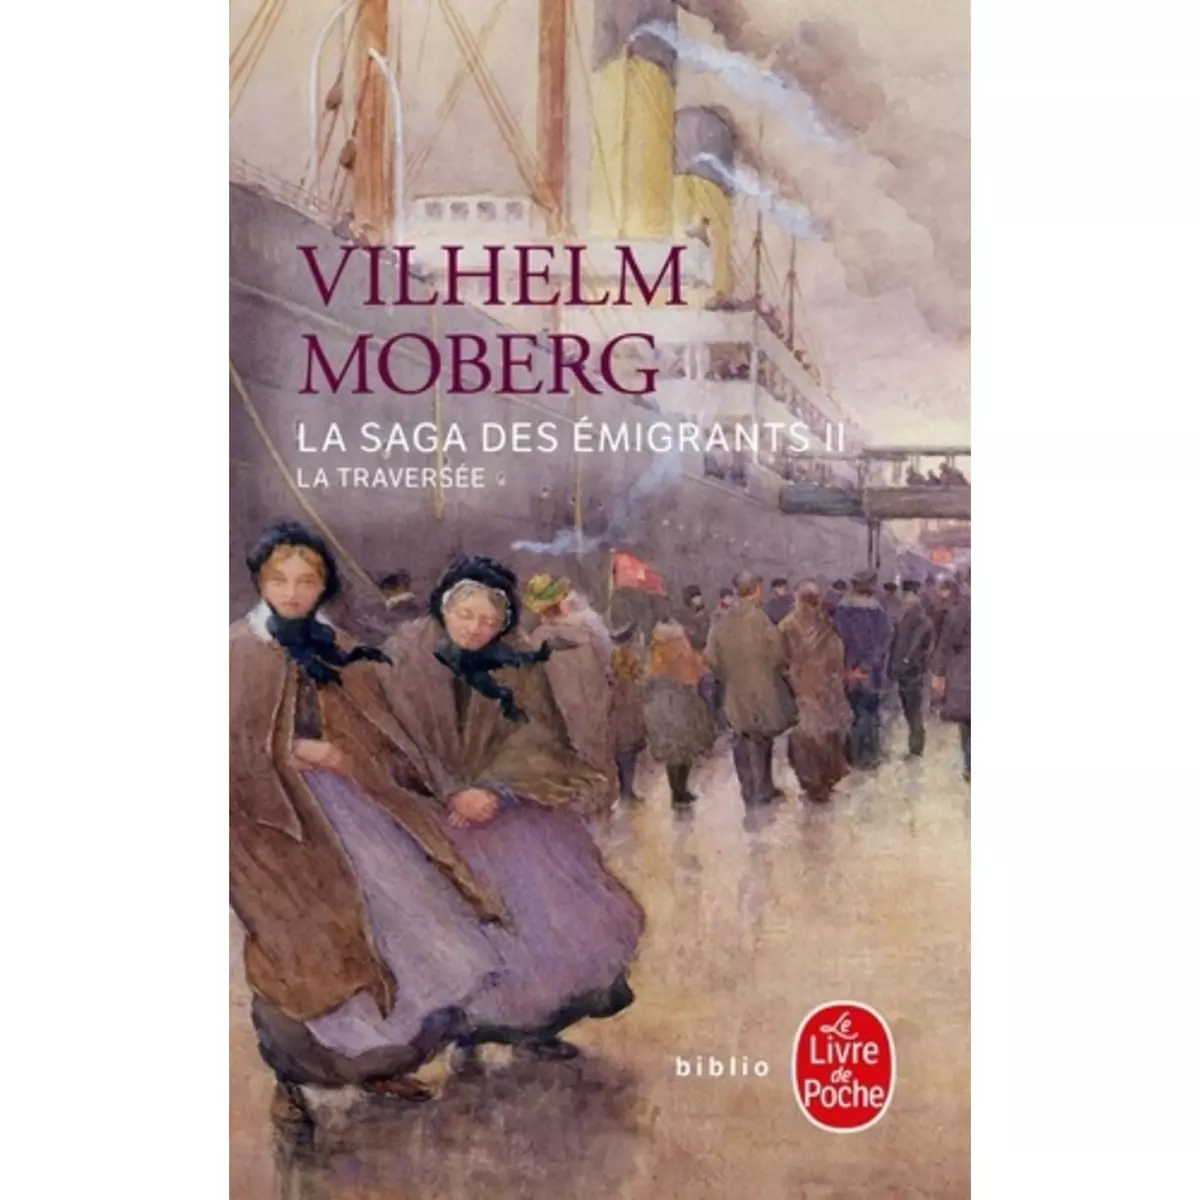  LA SAGA DES EMIGRANTS TOME 2 : LA TRAVERSEE, Moberg Vilhelm